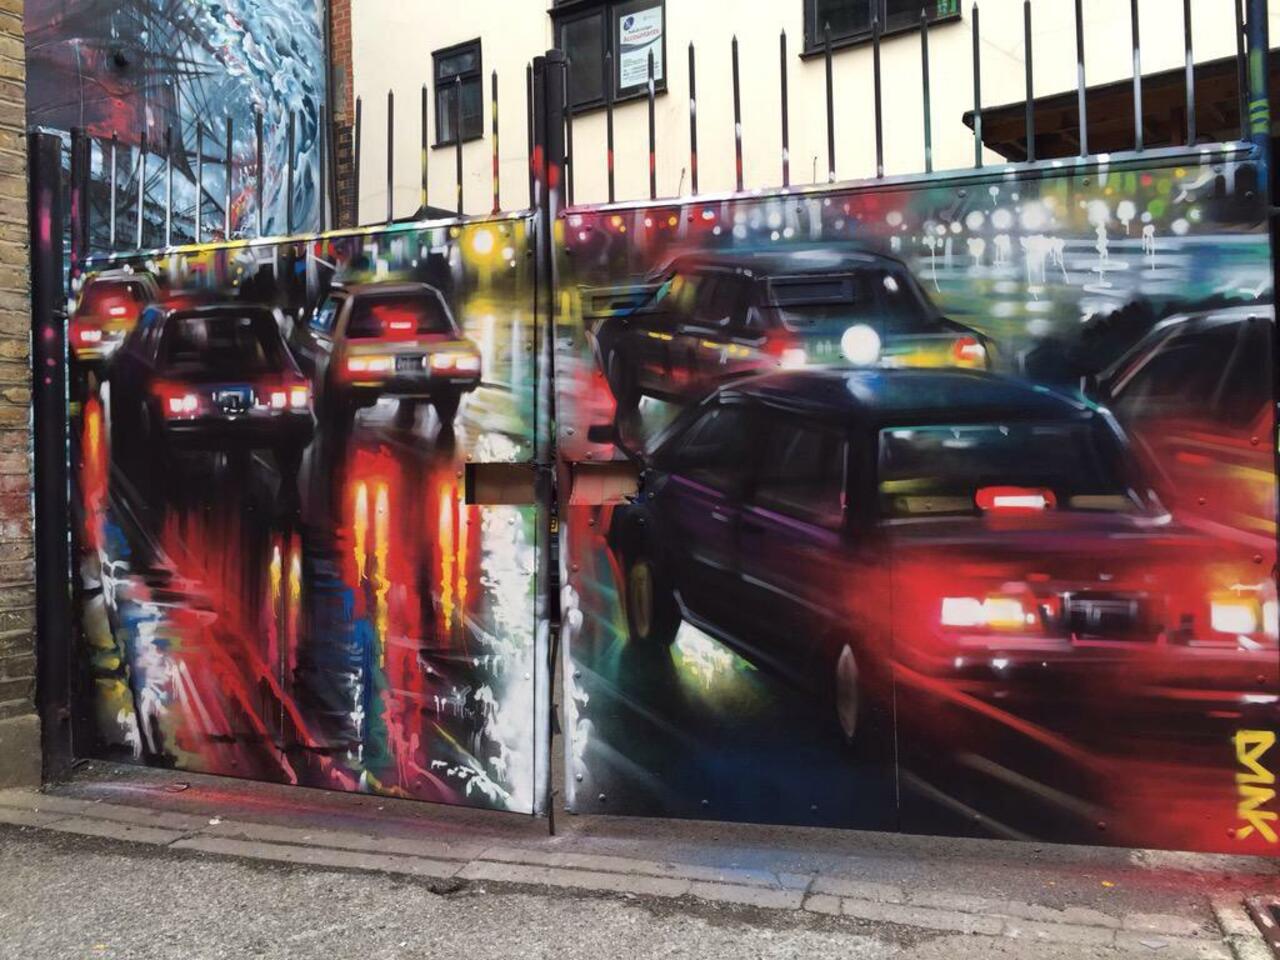 New Street Art by DanKitchener in Brick Lane London 

#art #graffiti #mural #streetart http://t.co/wufUudco27